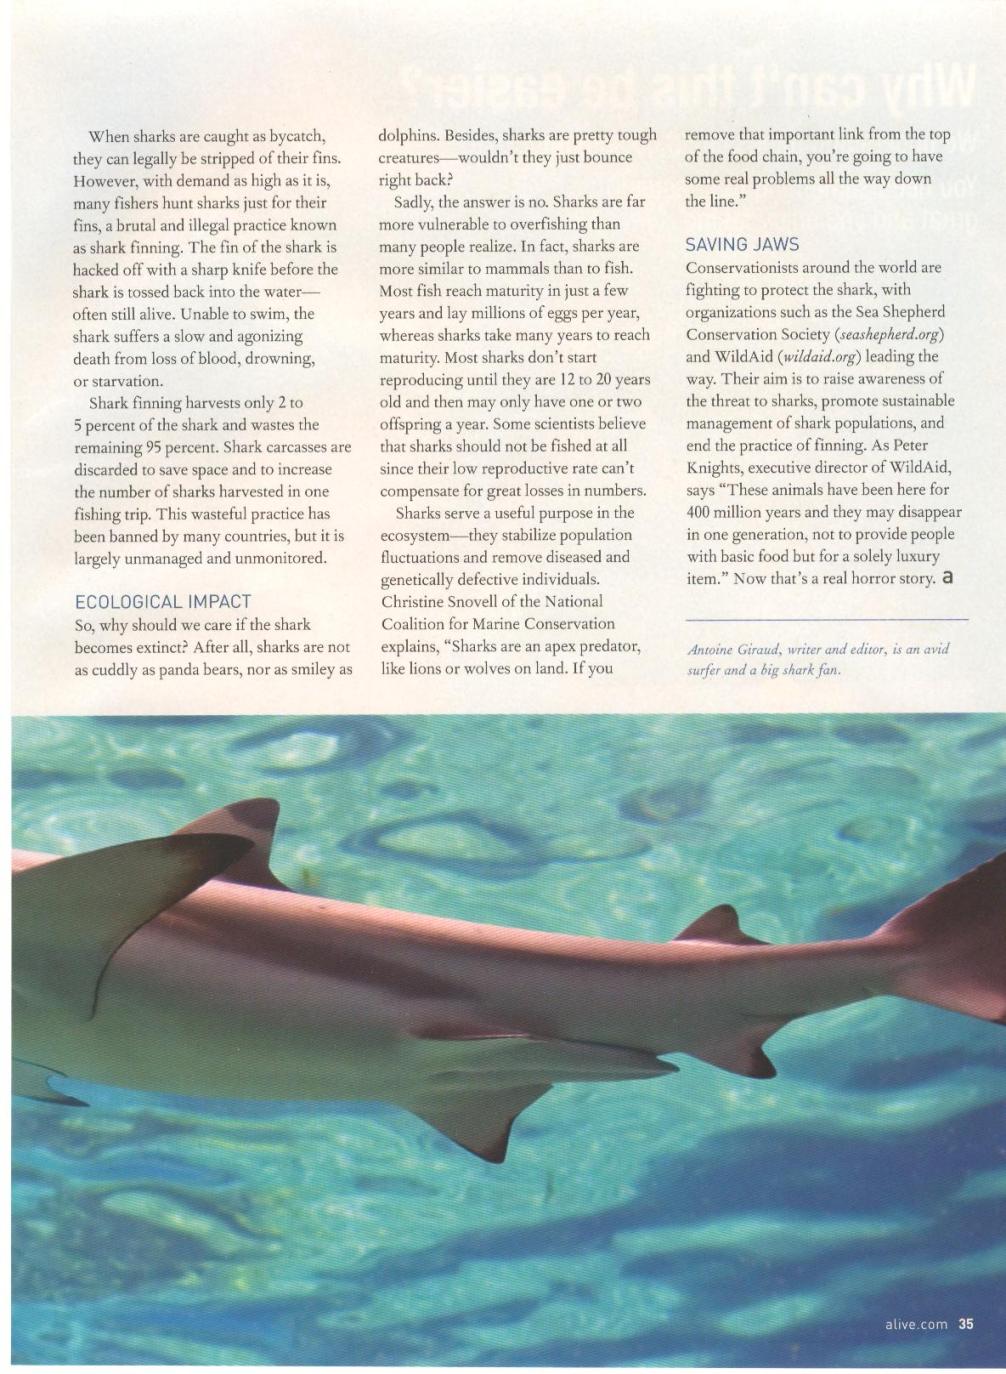 Shark article 4